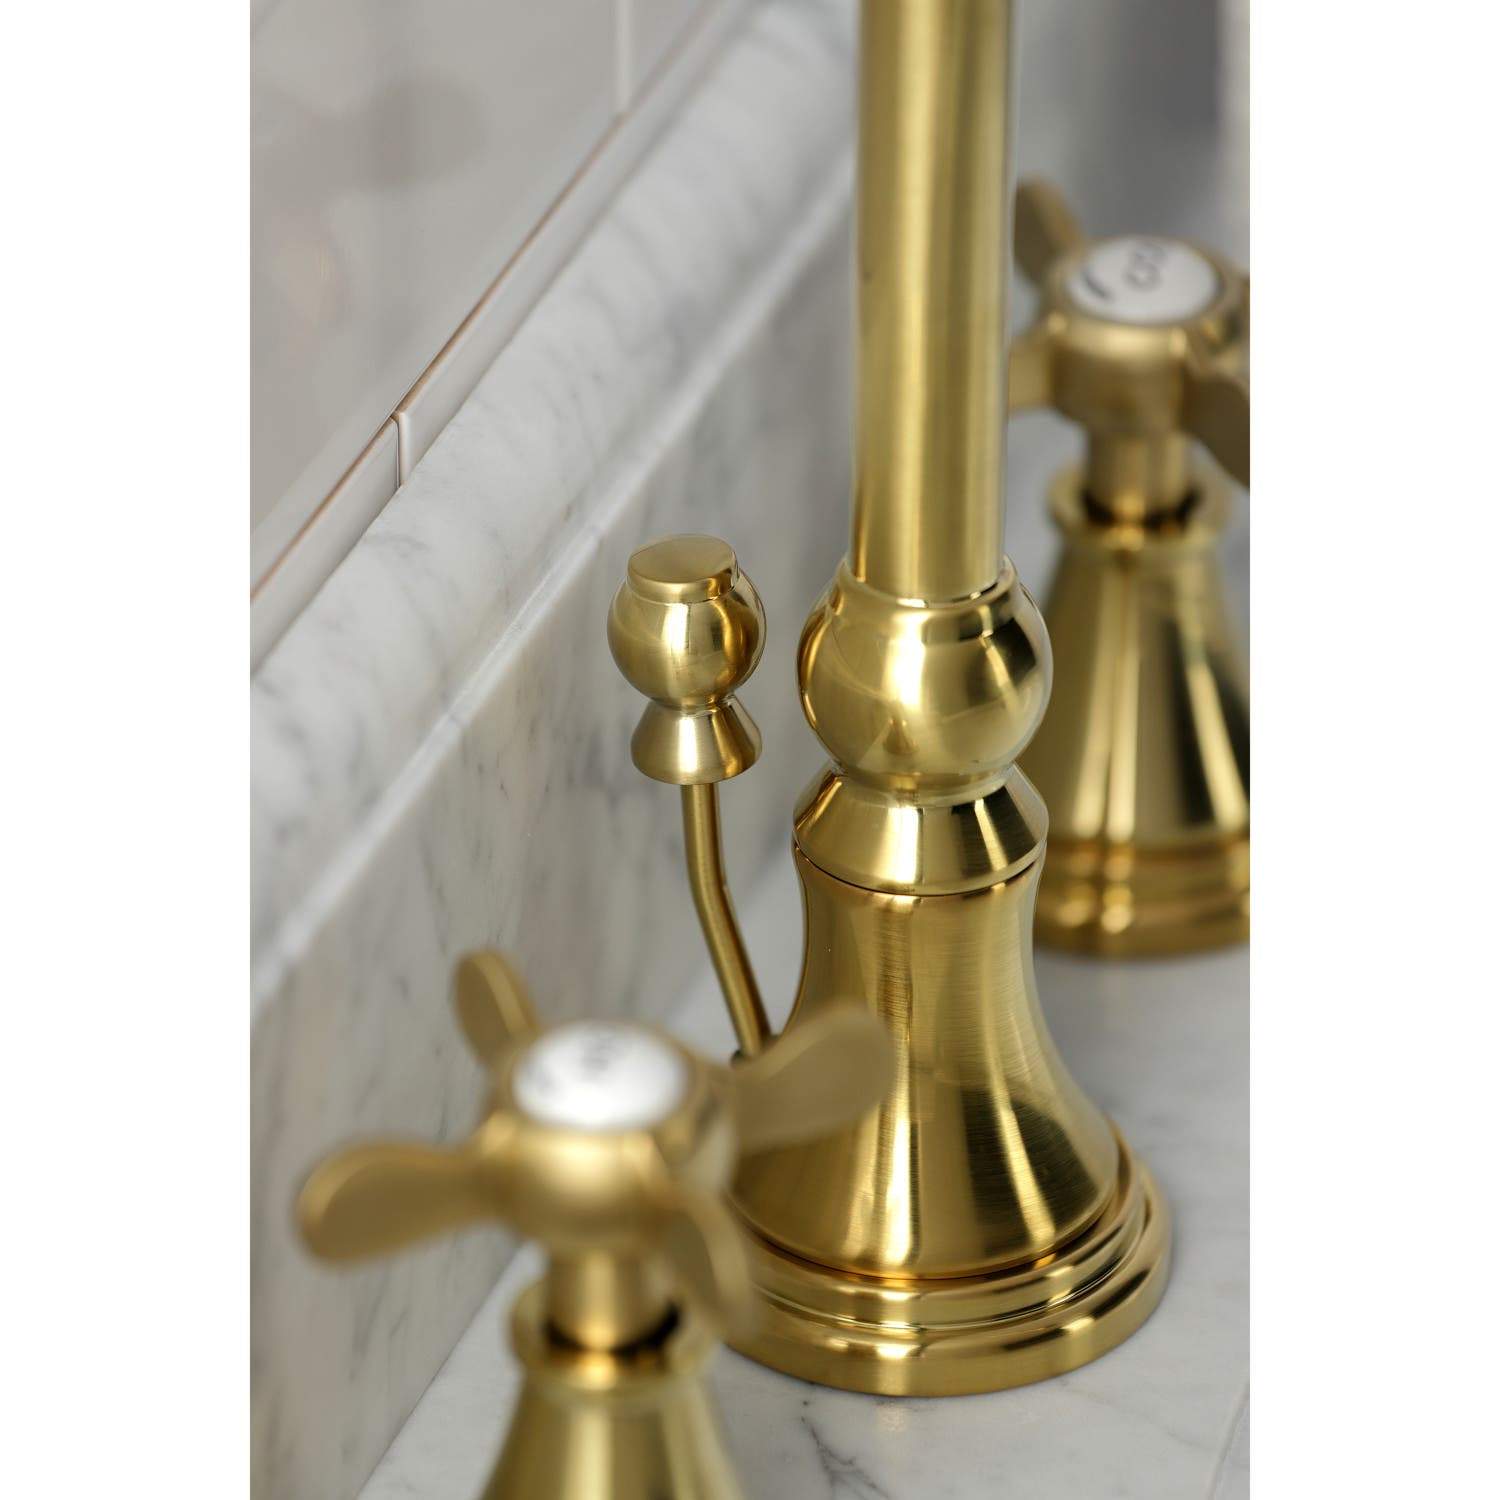 Kingston Brass KS298XBEX-P Essex Widespread Bathroom Faucet with Brass Pop-Up